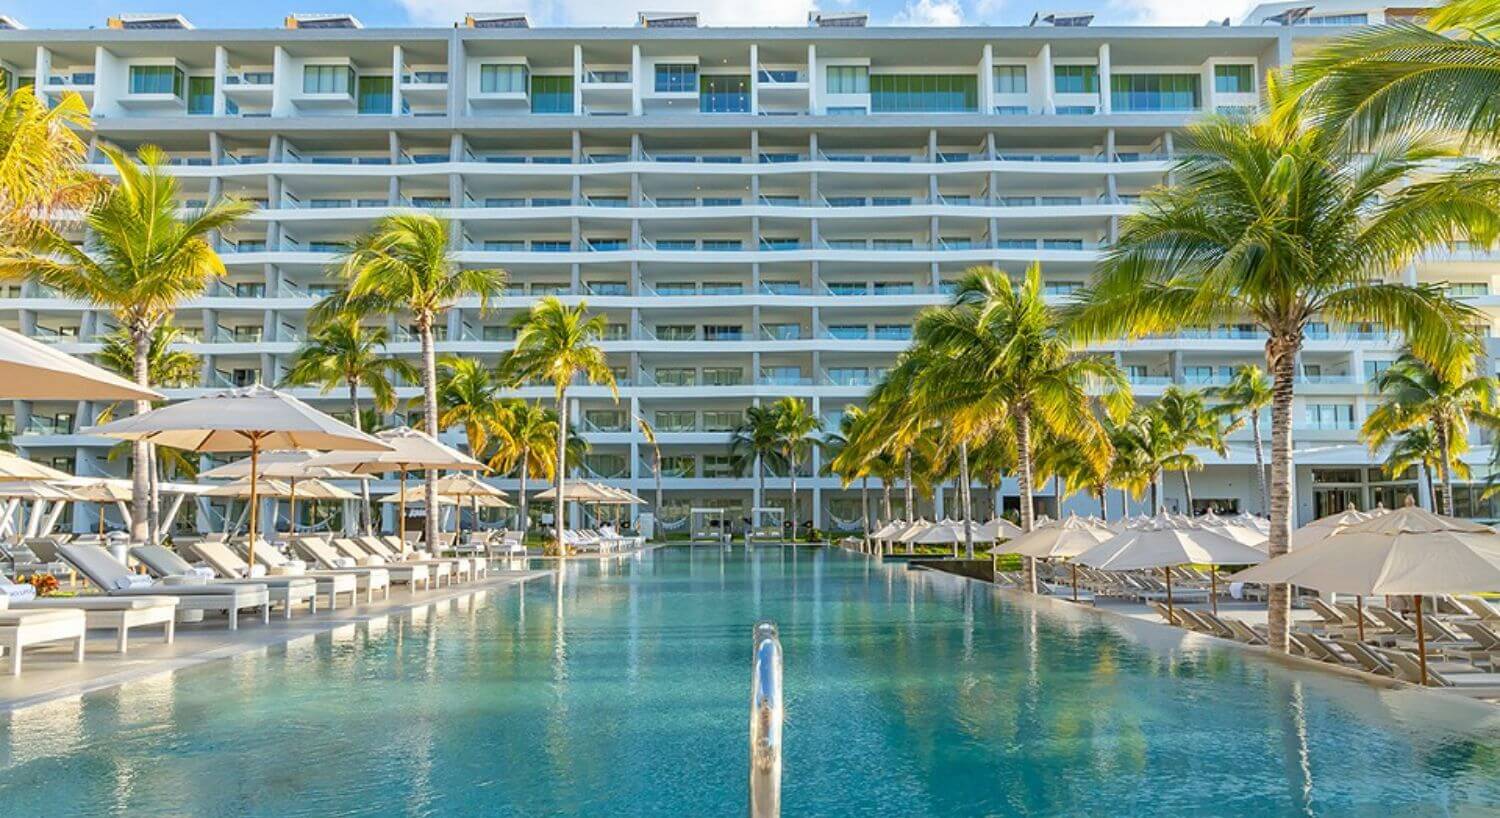 GB-Cancun-Resort-11-1500x818